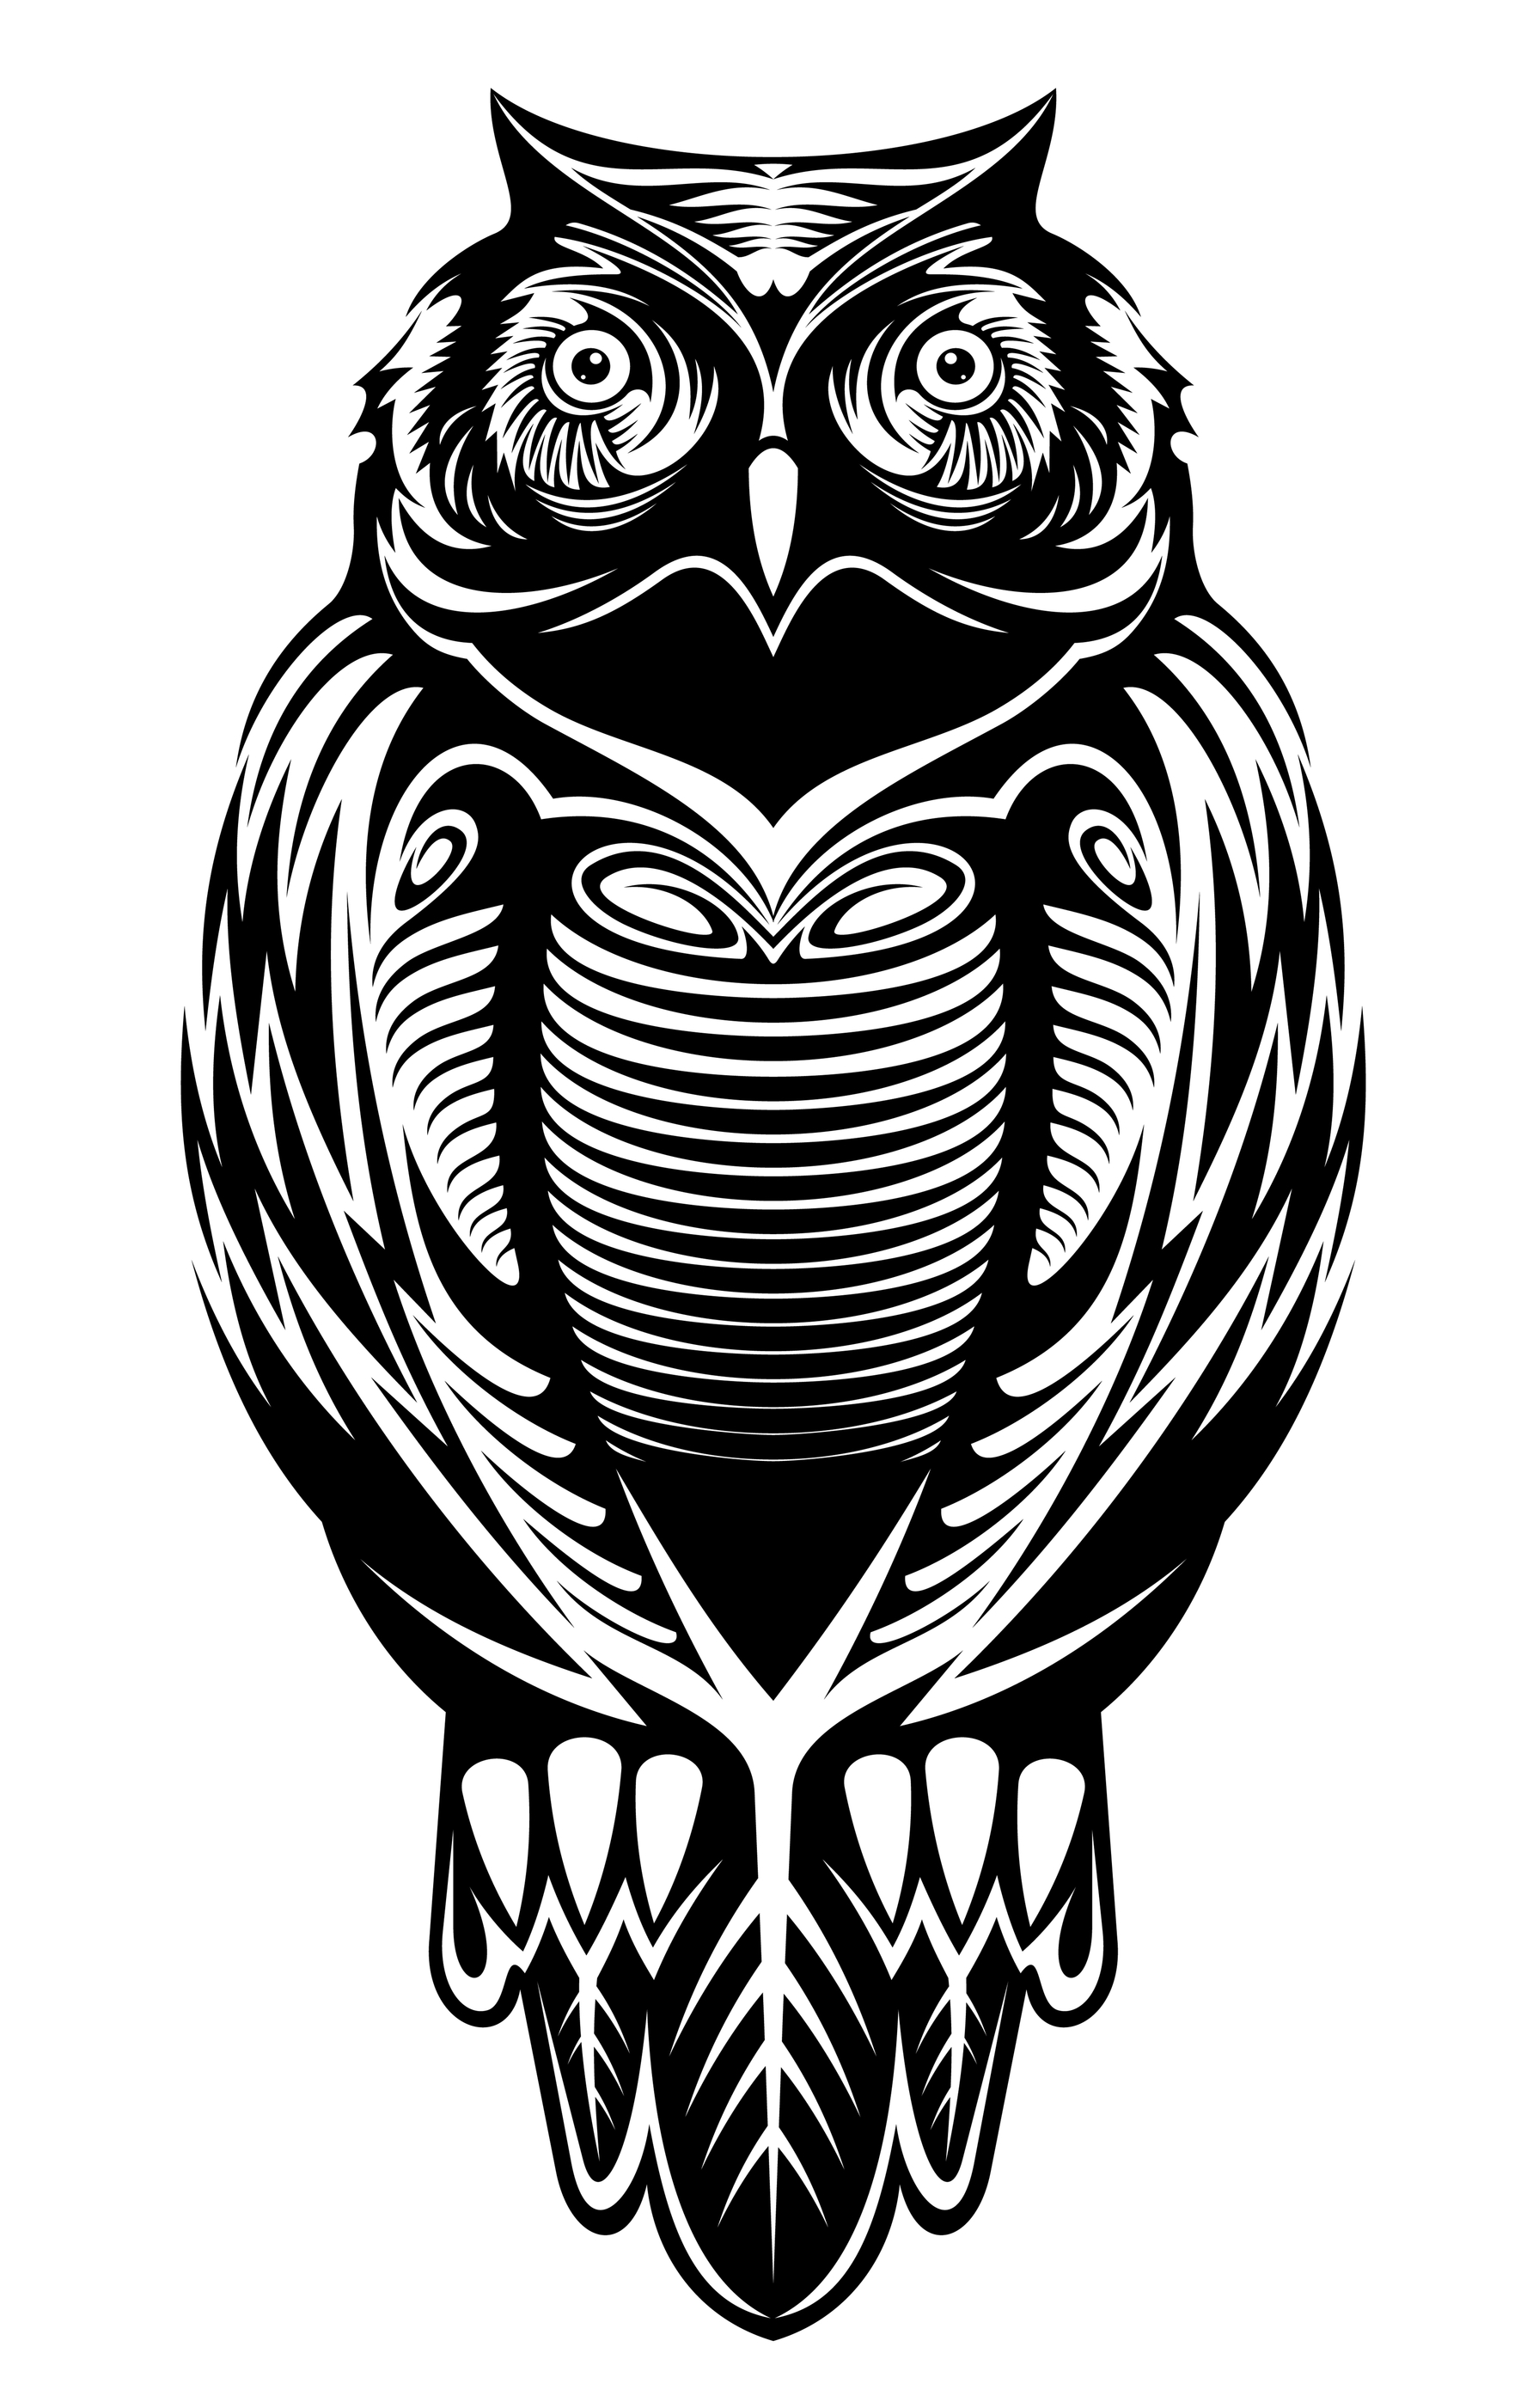 Great full-size black owl tattoo design